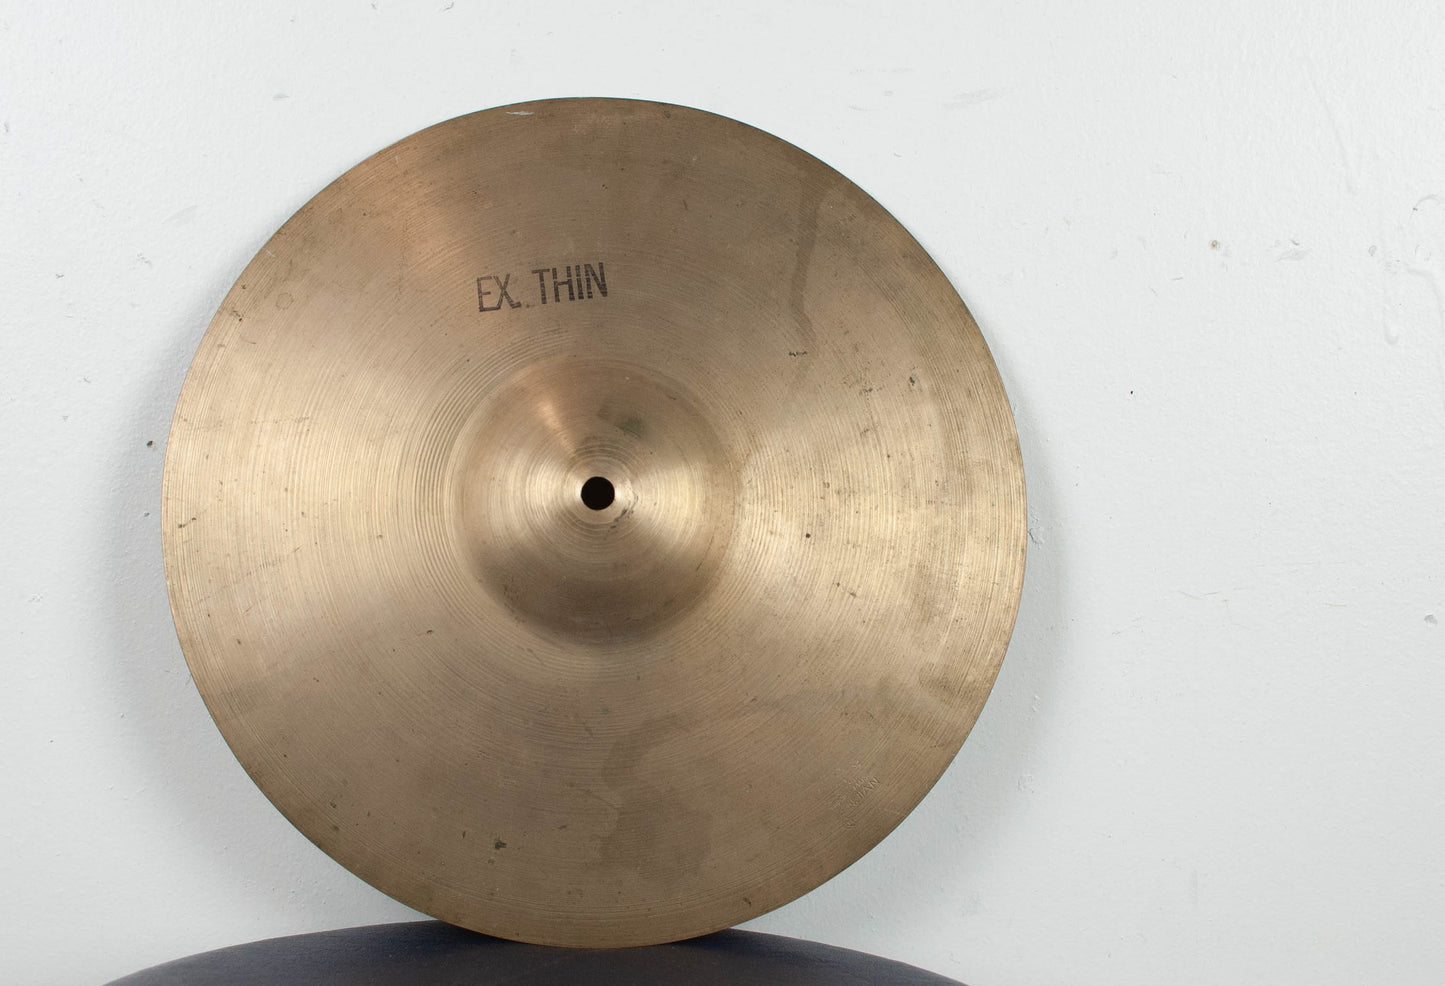 1960s Zenjian 12" Extra Thin Splash Cymbal 385g